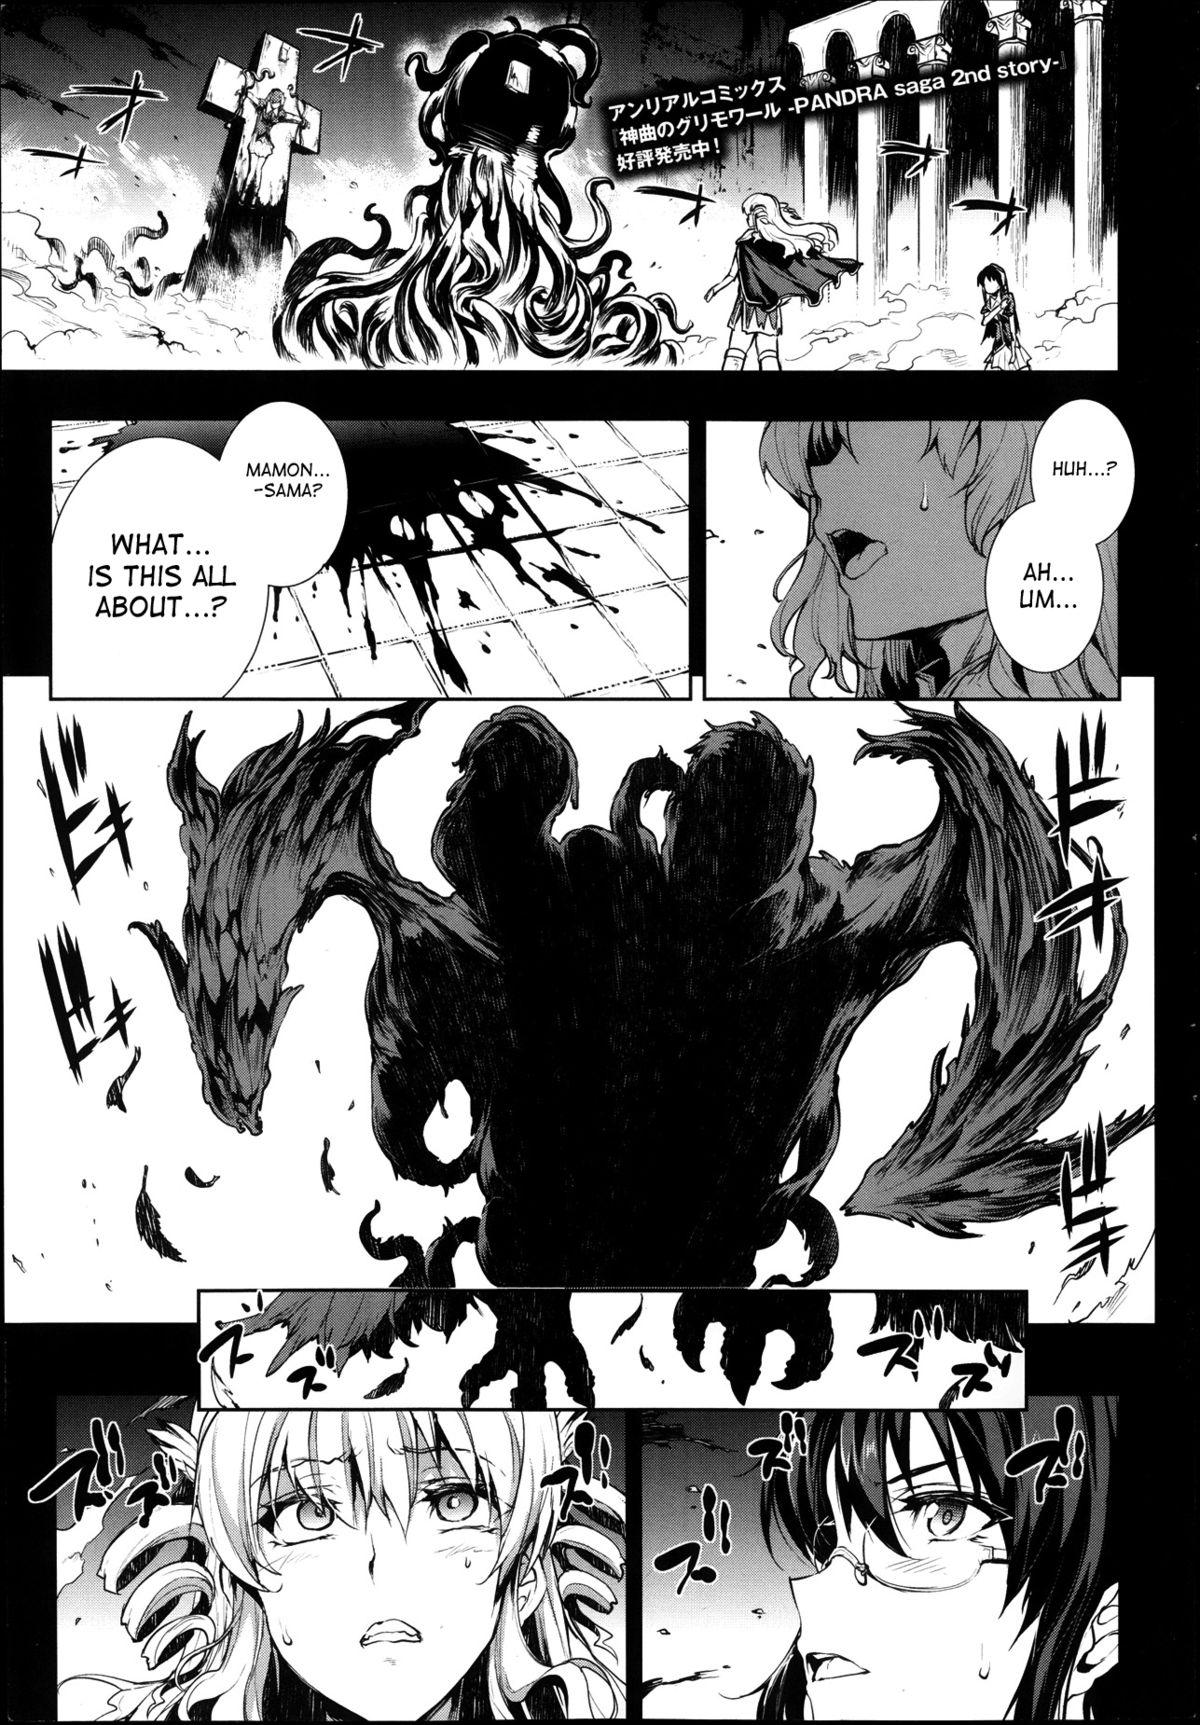 [Erect Sawaru] Shinkyoku no Grimoire -PANDRA saga 2nd story- Ch. 1-18 + Side Story x 3 [English] [SaHa] 248